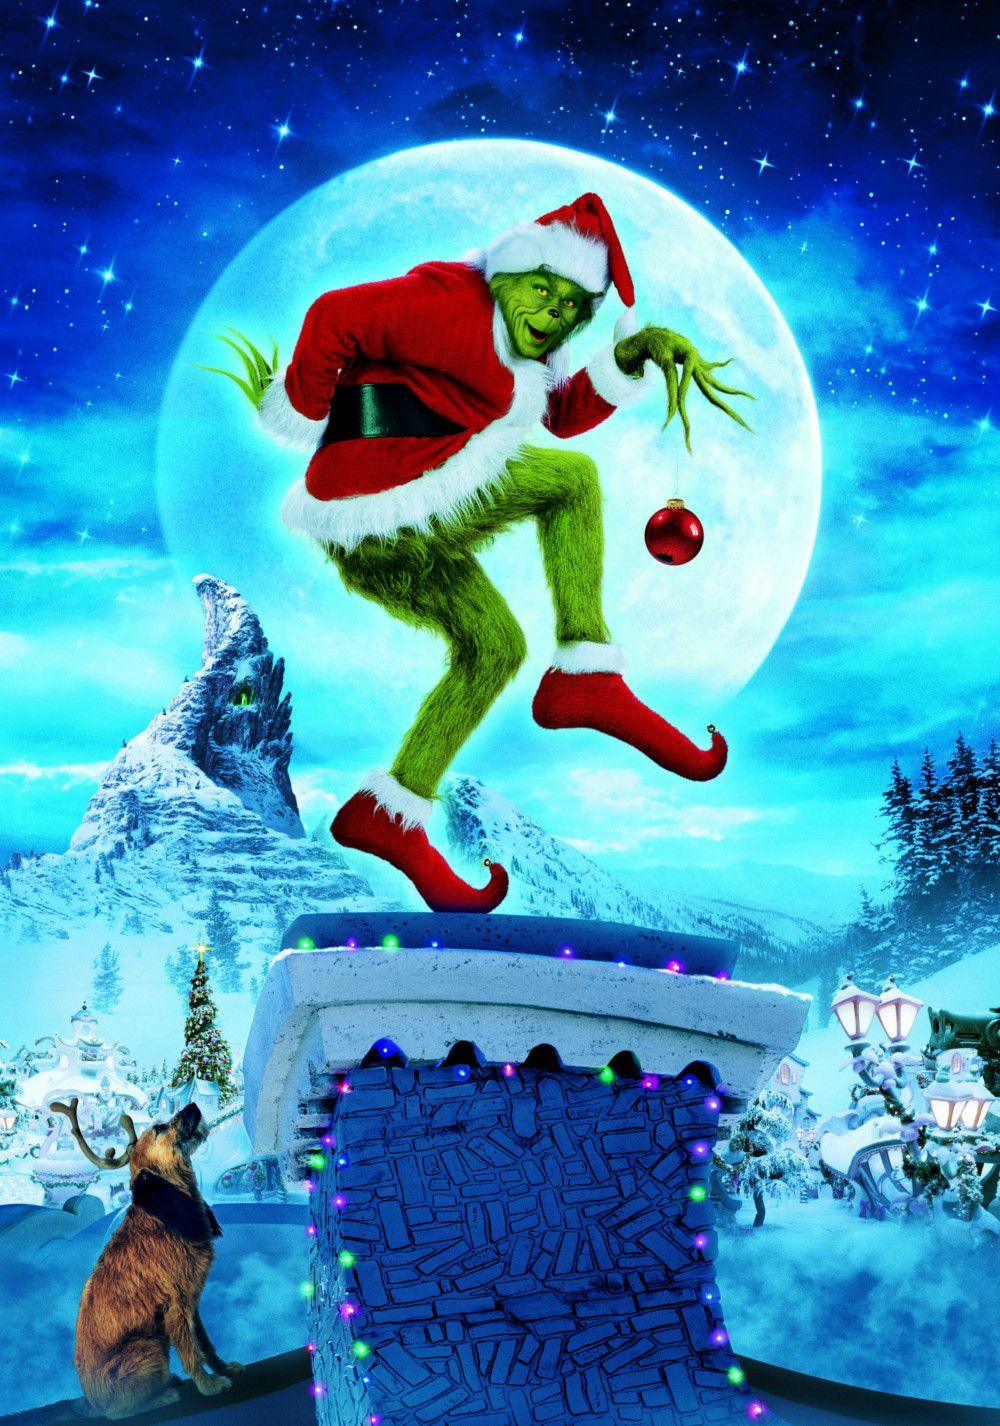 Dr. Seuss' How The Grinch Stole Christmas Wallpaper #GTLWK35